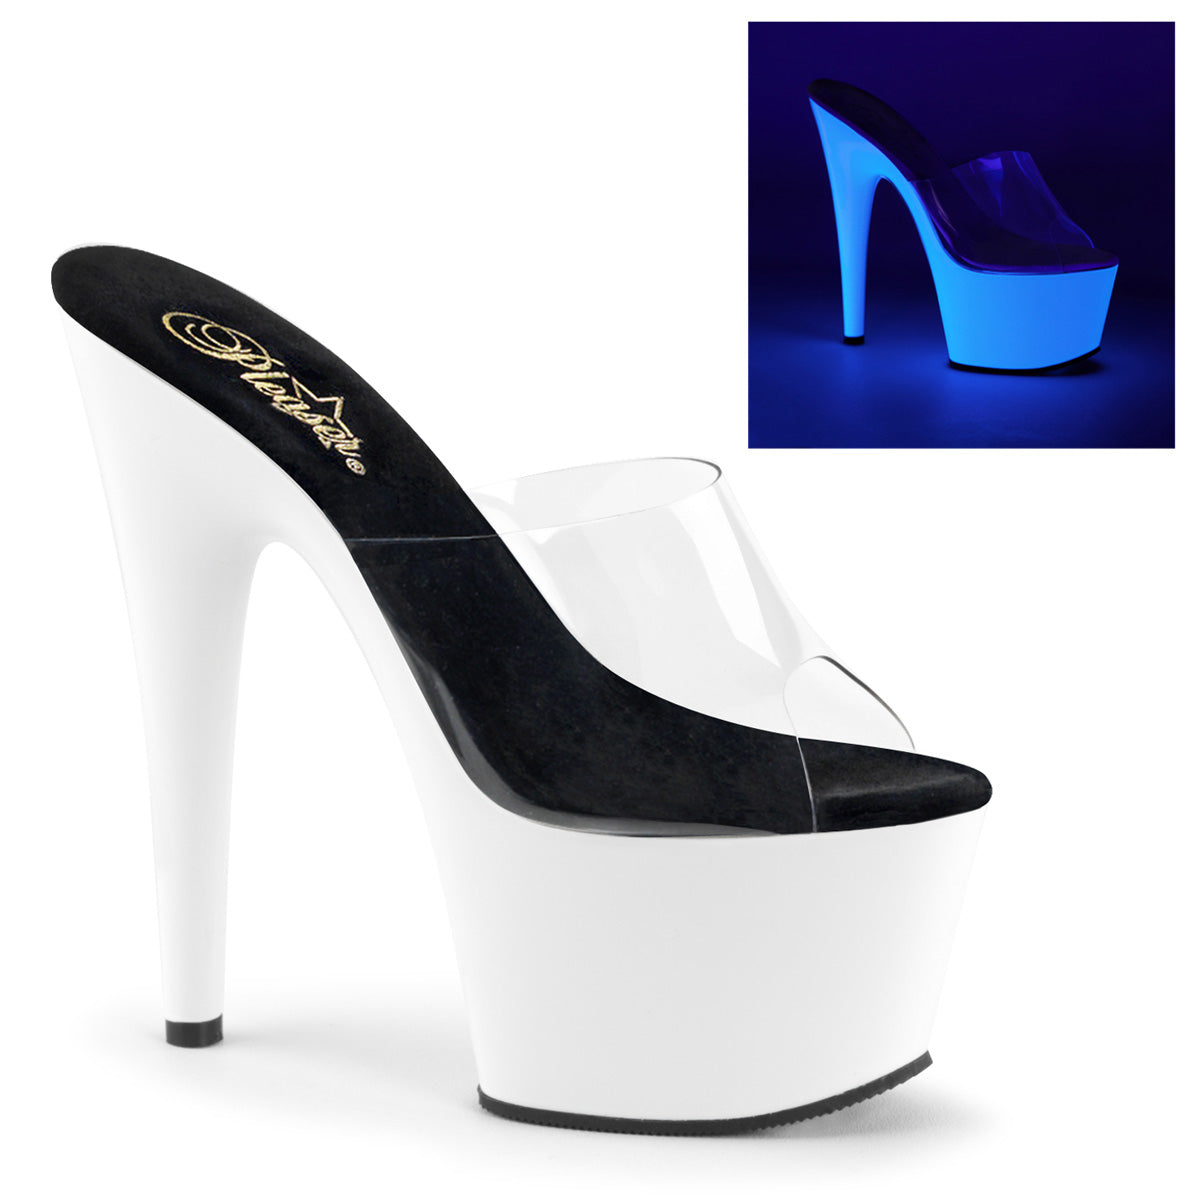 ADORE-701UV 7 "Clear Neon White Strippers Platform Sandals